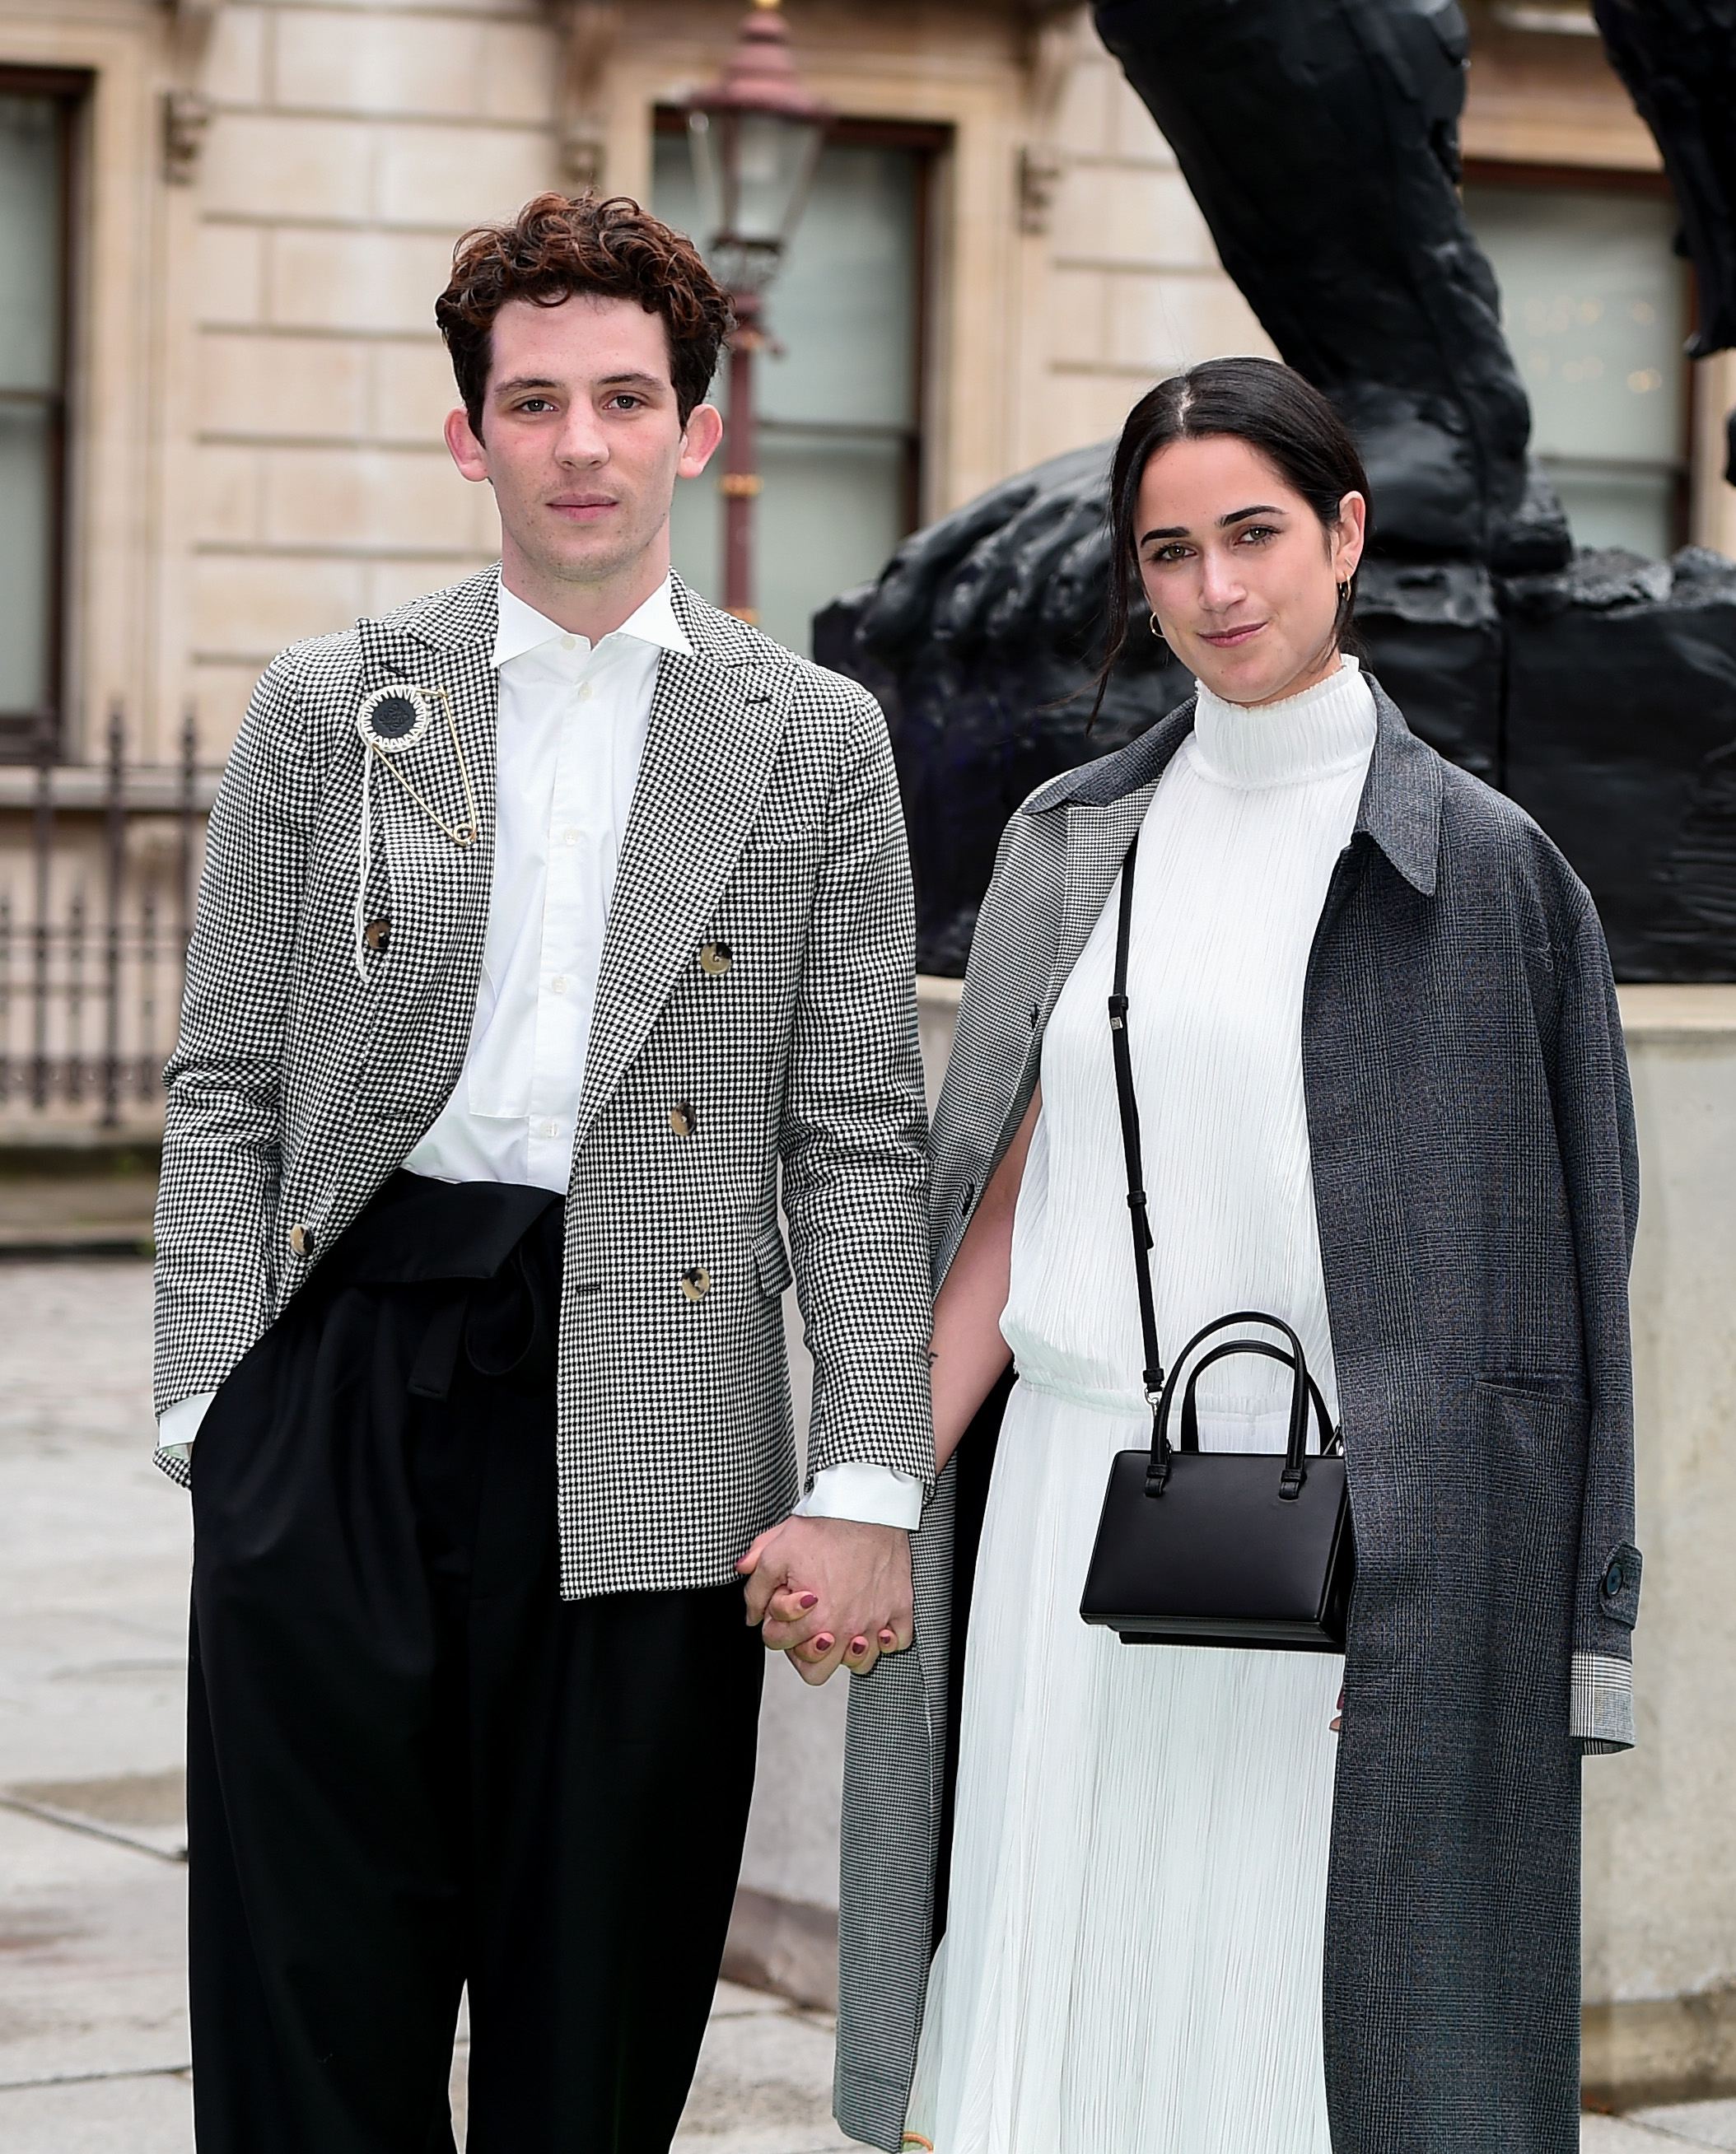 Josh O'Connor ve Margot Hauer-King, 4 Haziran 2019'da Londra, İngiltere'de Royal Academy of Arts'ta düzenlenen Royal Academy of Arts Yaz sergisi ön izlemesine katıldı.  |  Kaynak: Getty Images